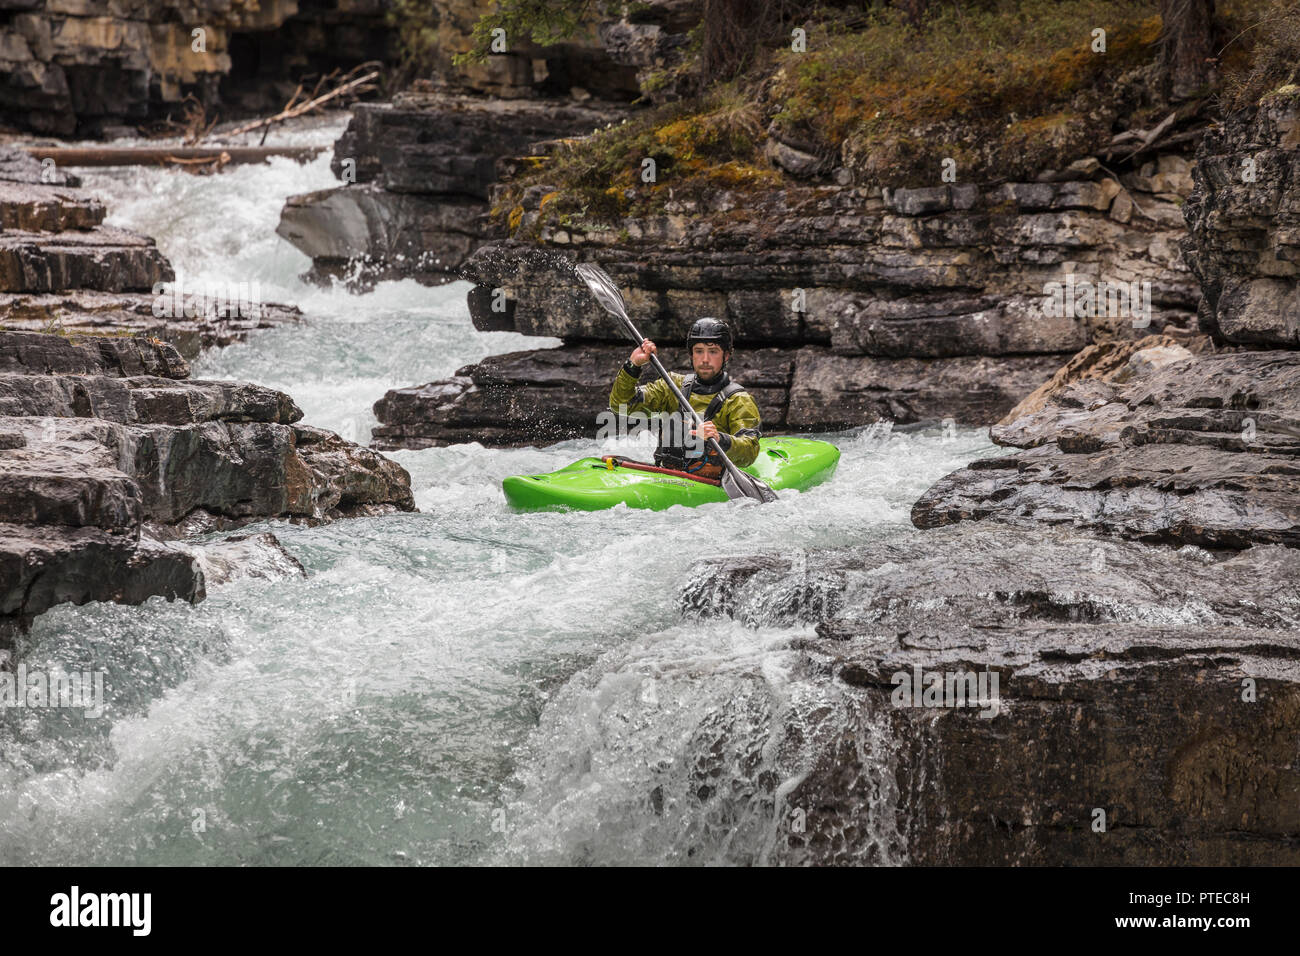 Kayaker negotiating rapids on Beauty Creek in Jasper National Park, Canada. Stock Photo